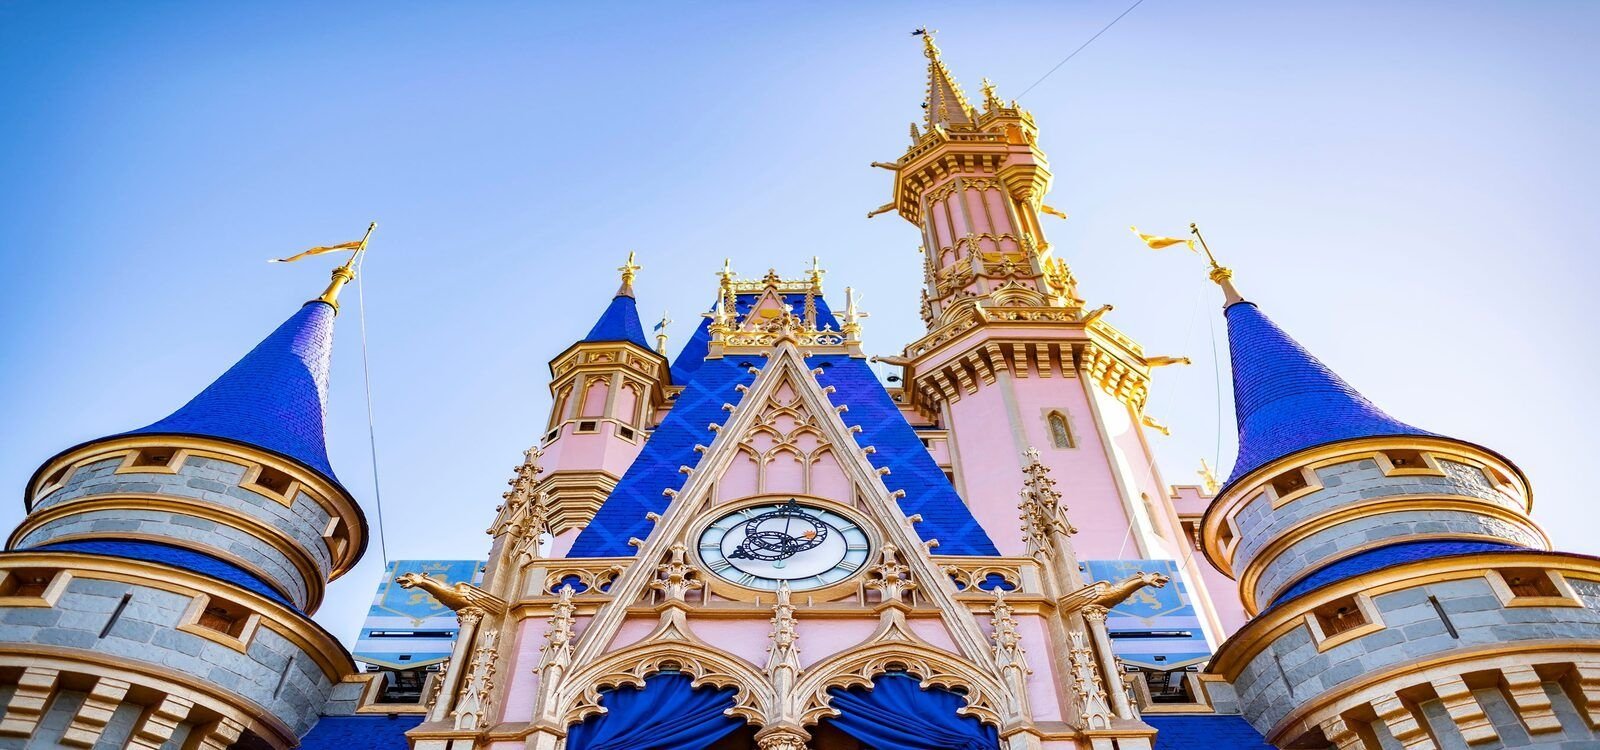 A view of Cinderella's castle in Magic Kingdom. Disney World Orlando